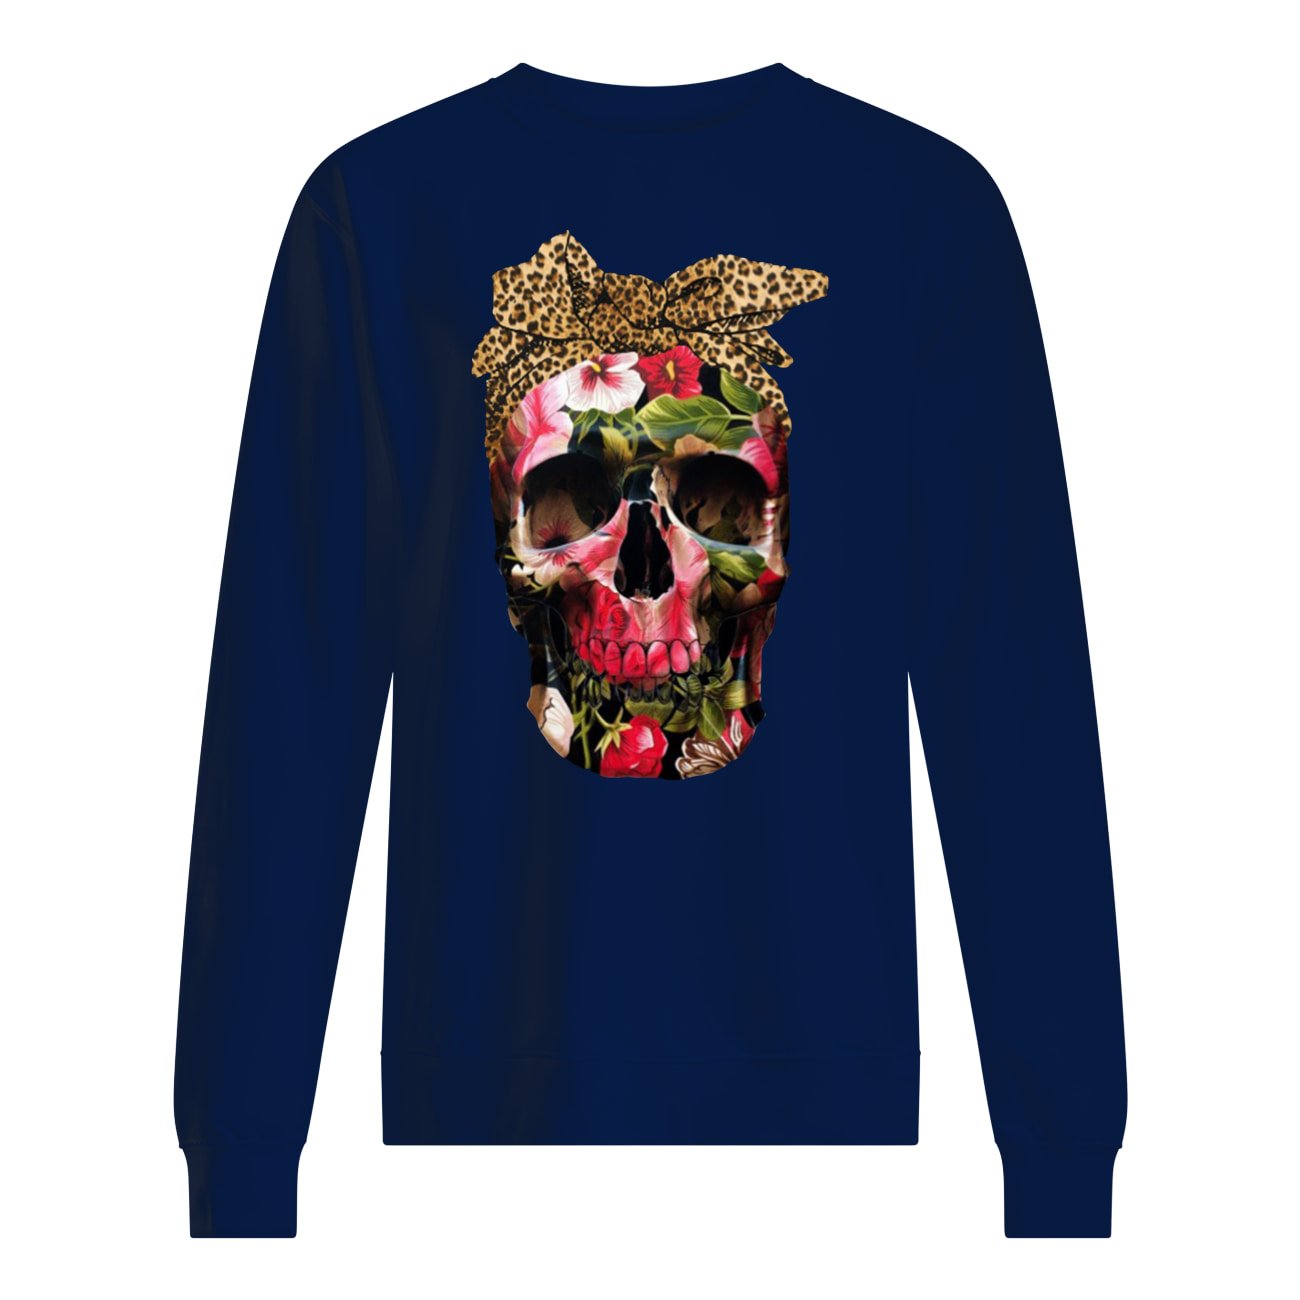 Floral skull leopard sweatshirt